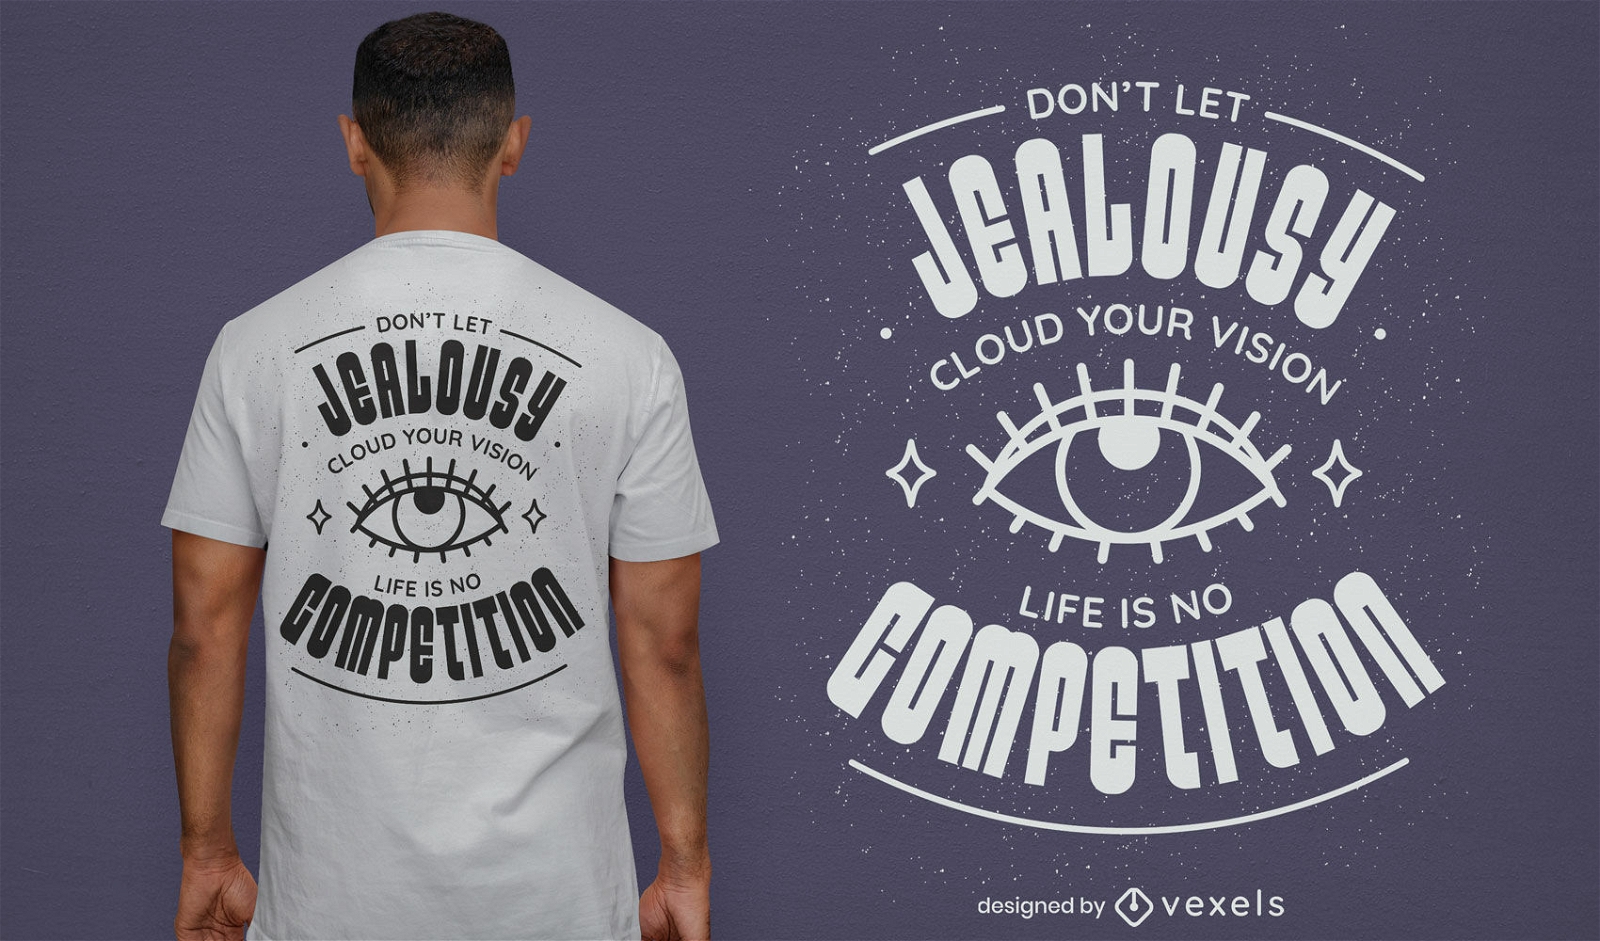 Giant eye jealousy quote t-shirt design